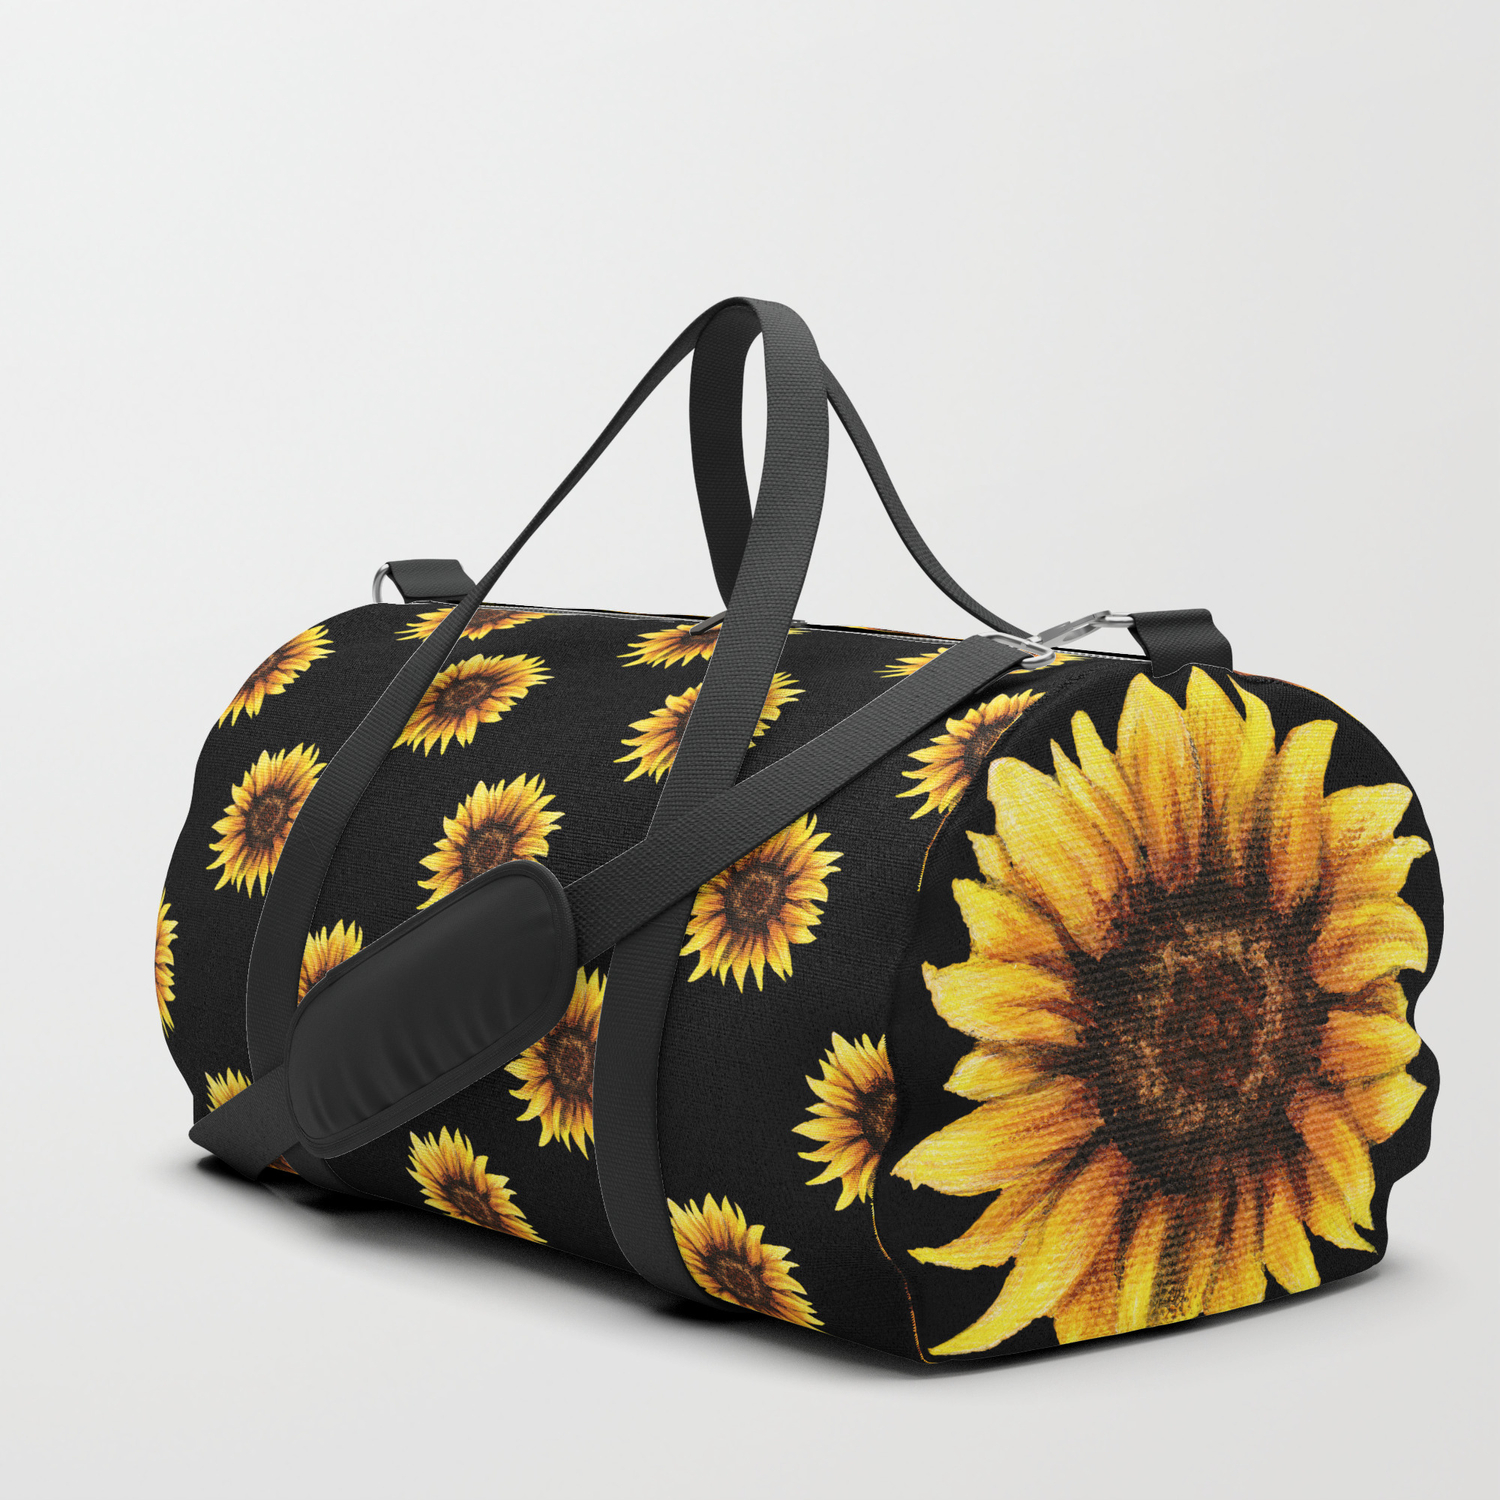 Sunflower Duffle Bag by Naomi Shingler | Society6